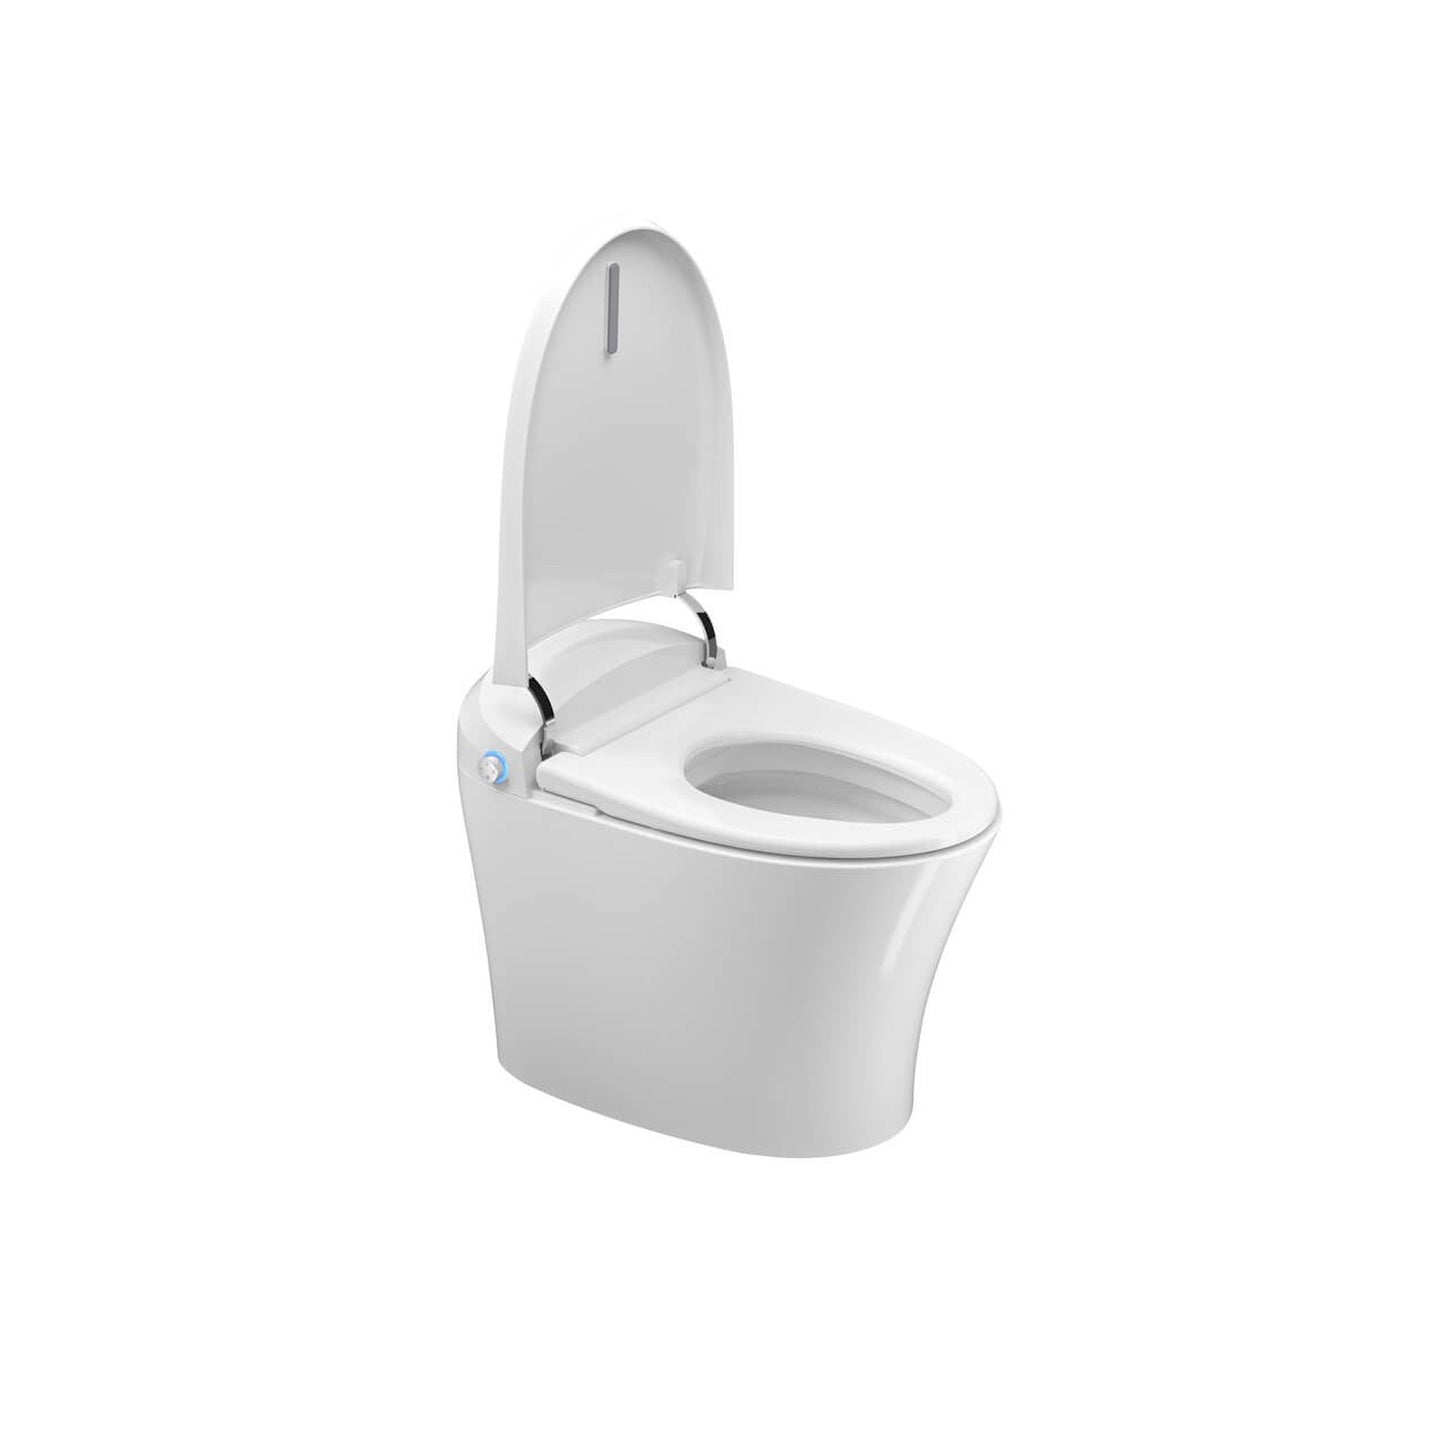 Castello USA New York White Simple Smart Toilet With Built-In Bidet